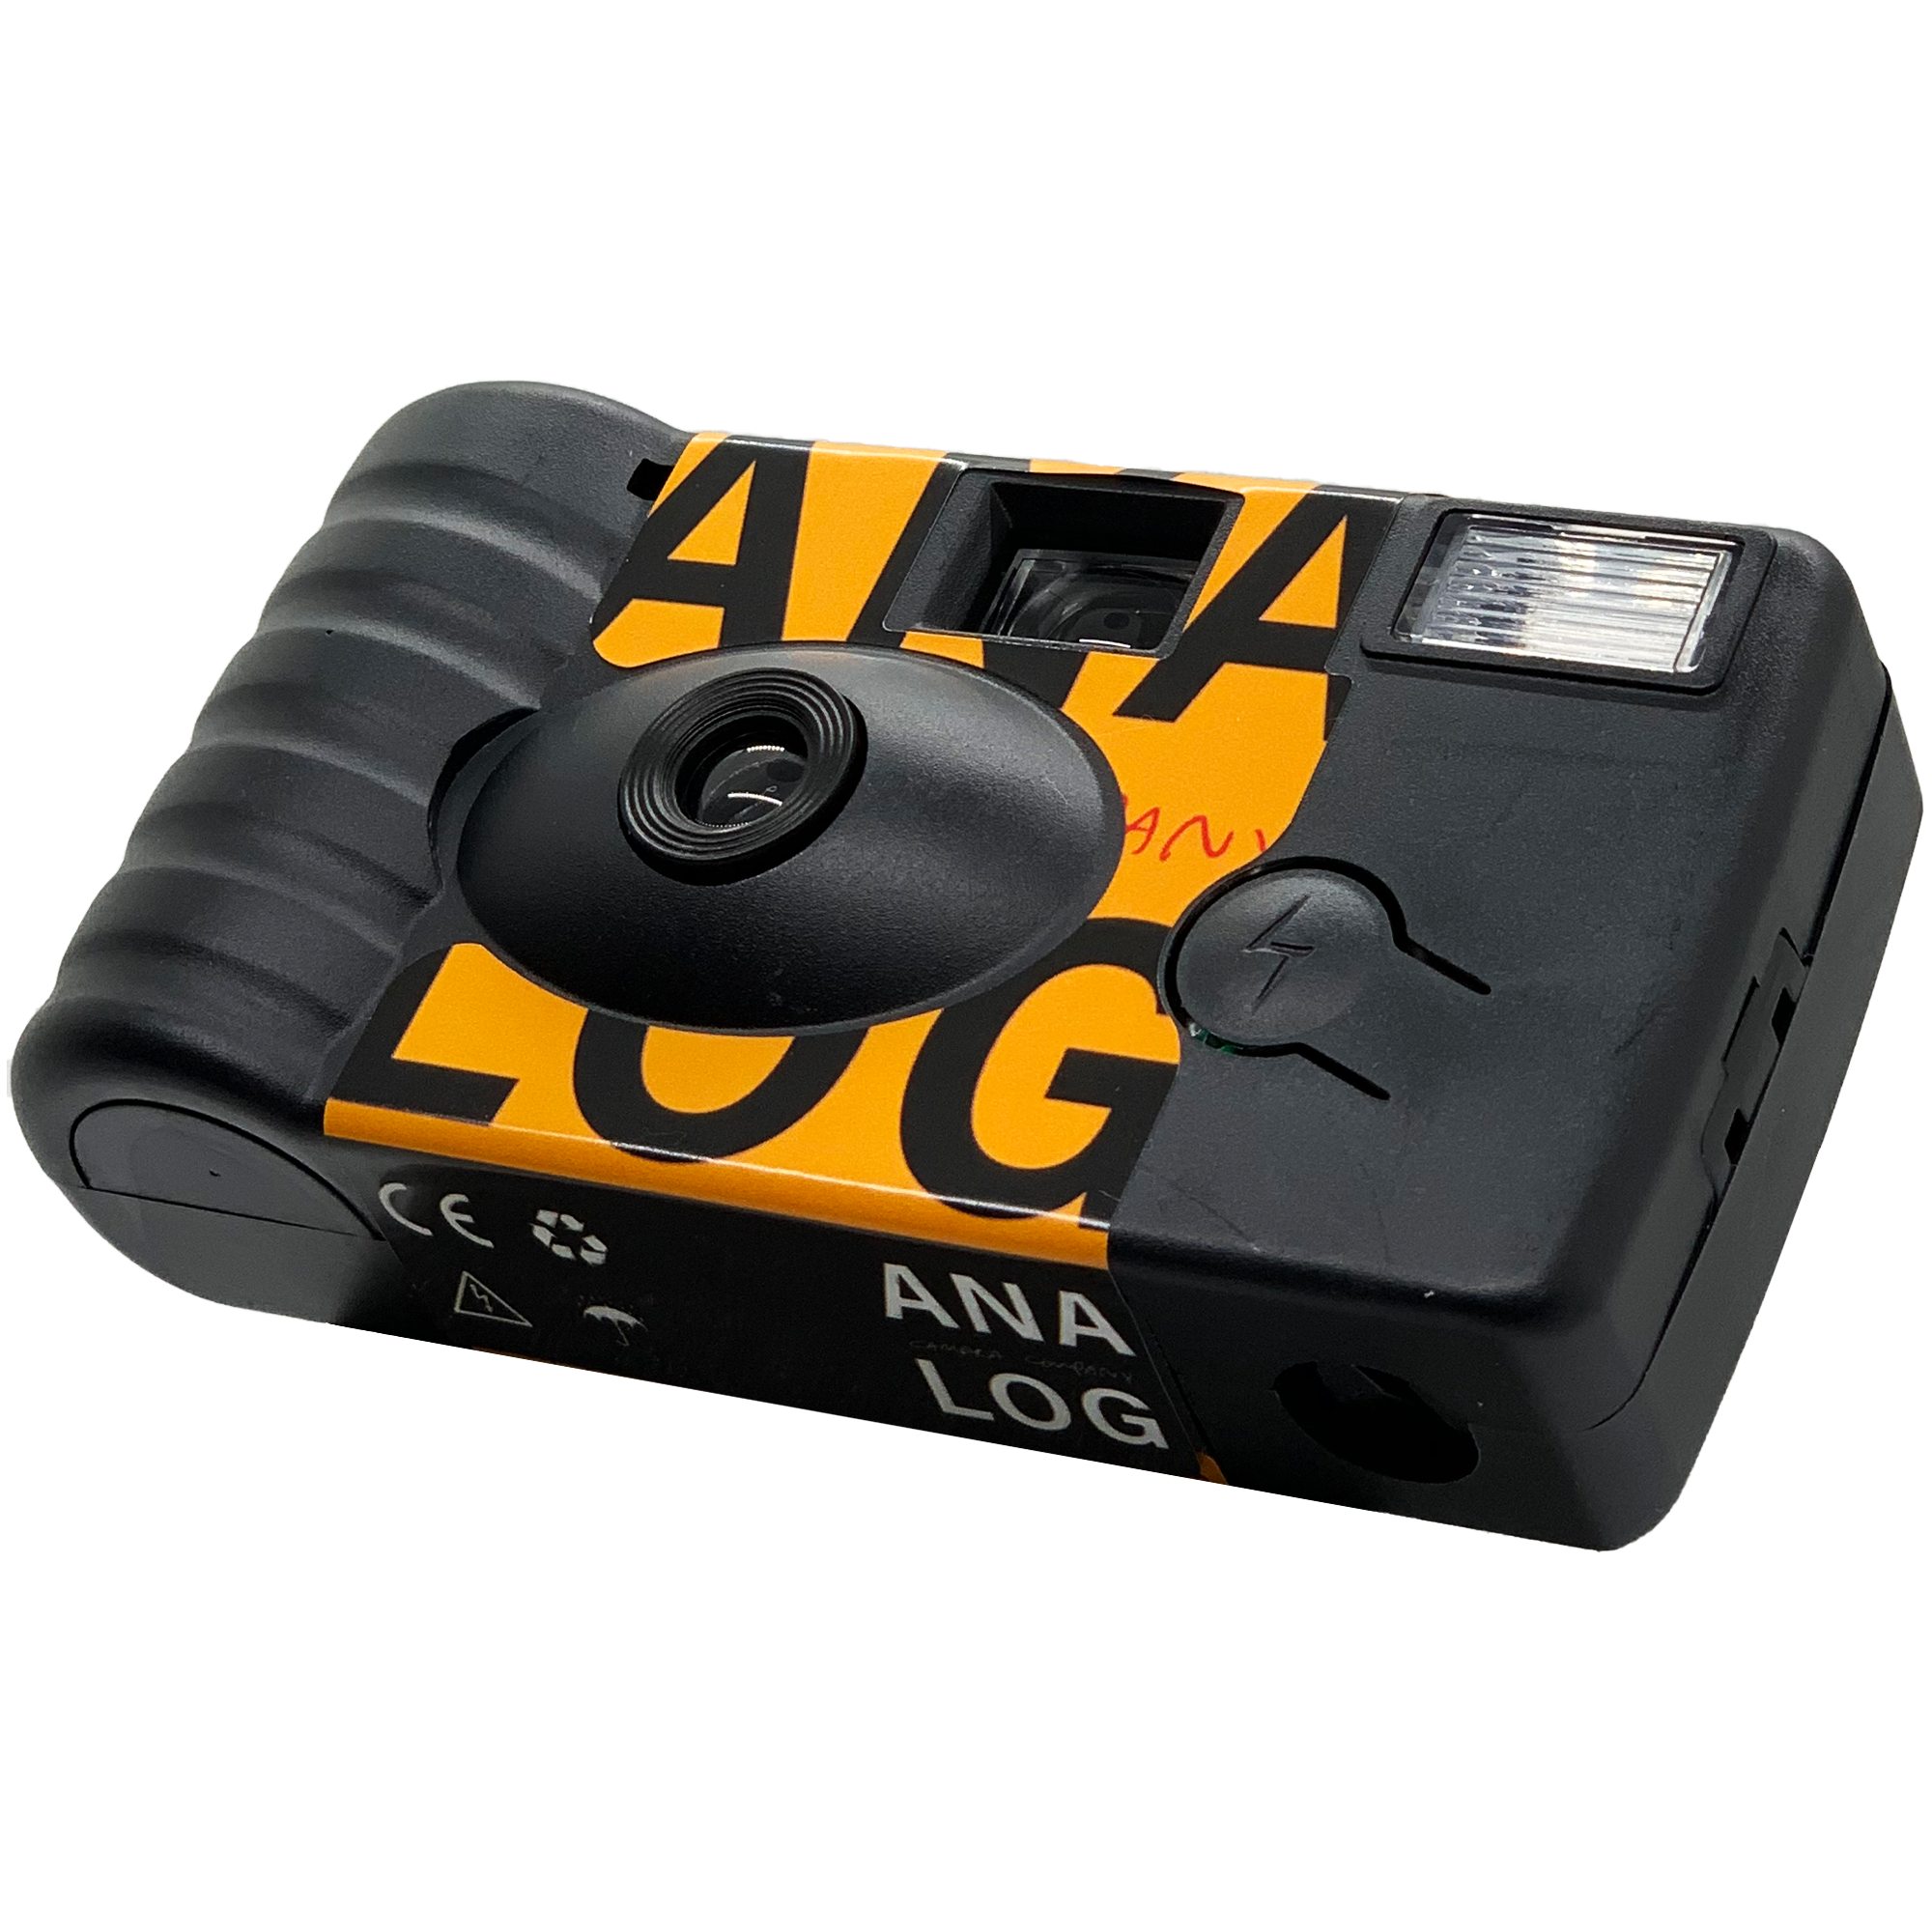 Analog Disposable Camera + Digital Uploads